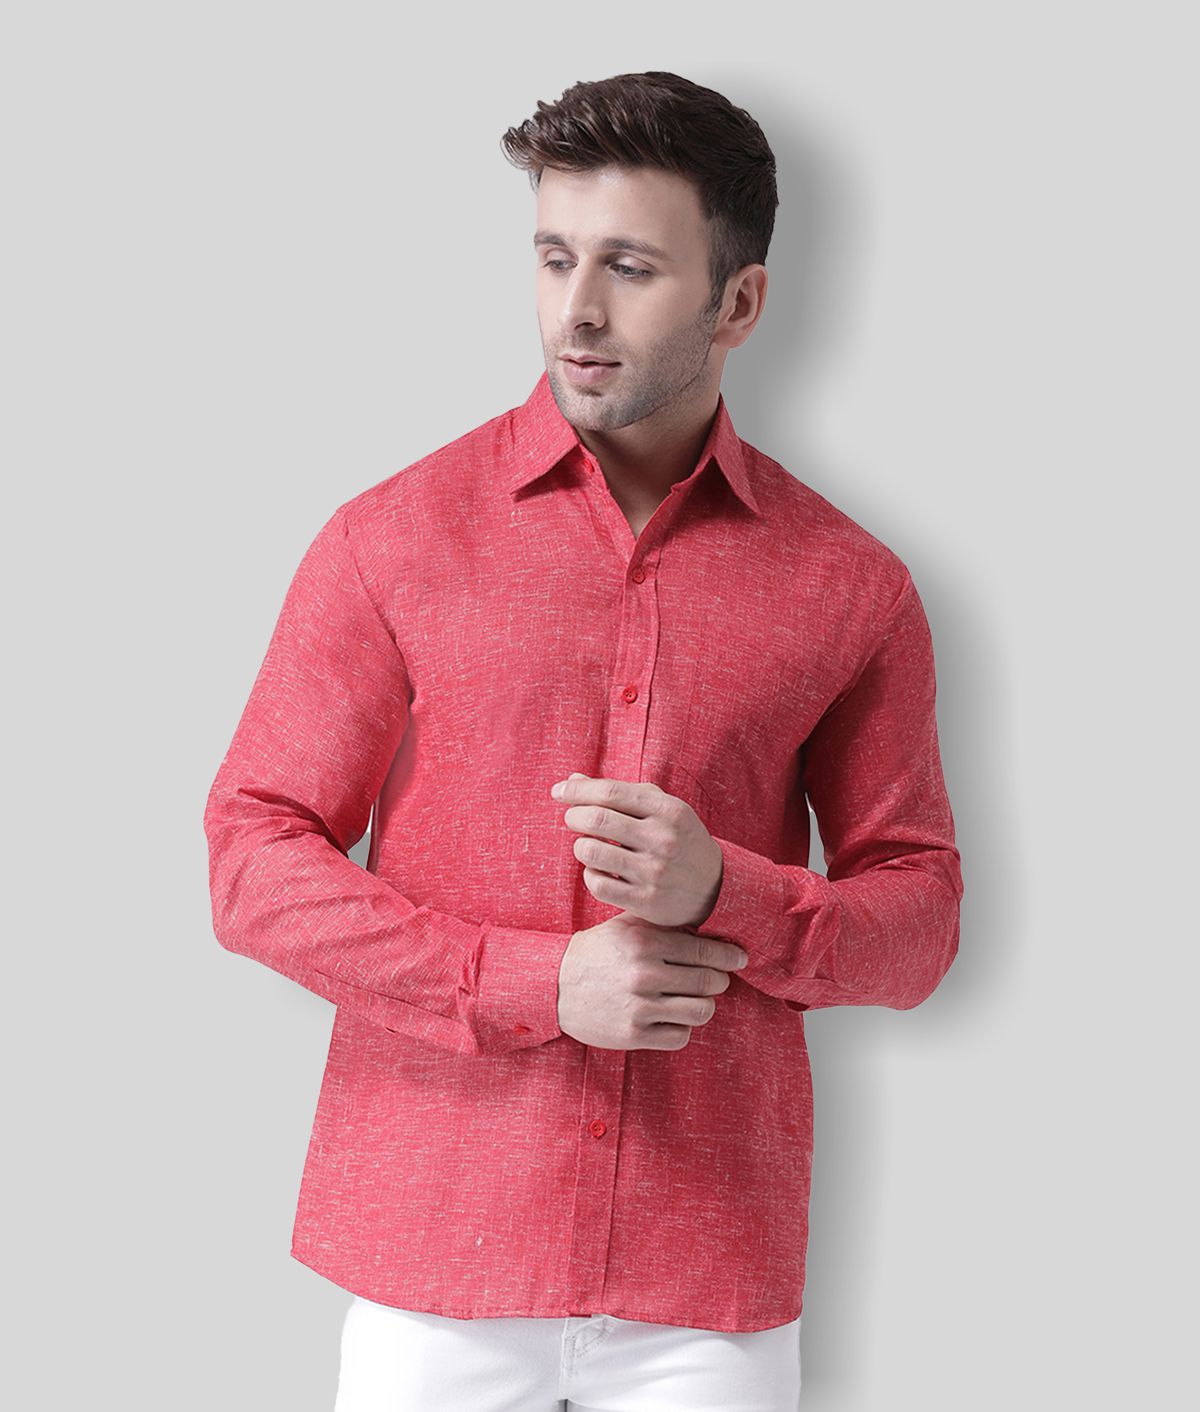 RIAG - Red Linen Regular Fit Men's Casual Shirt (Pack of 1)